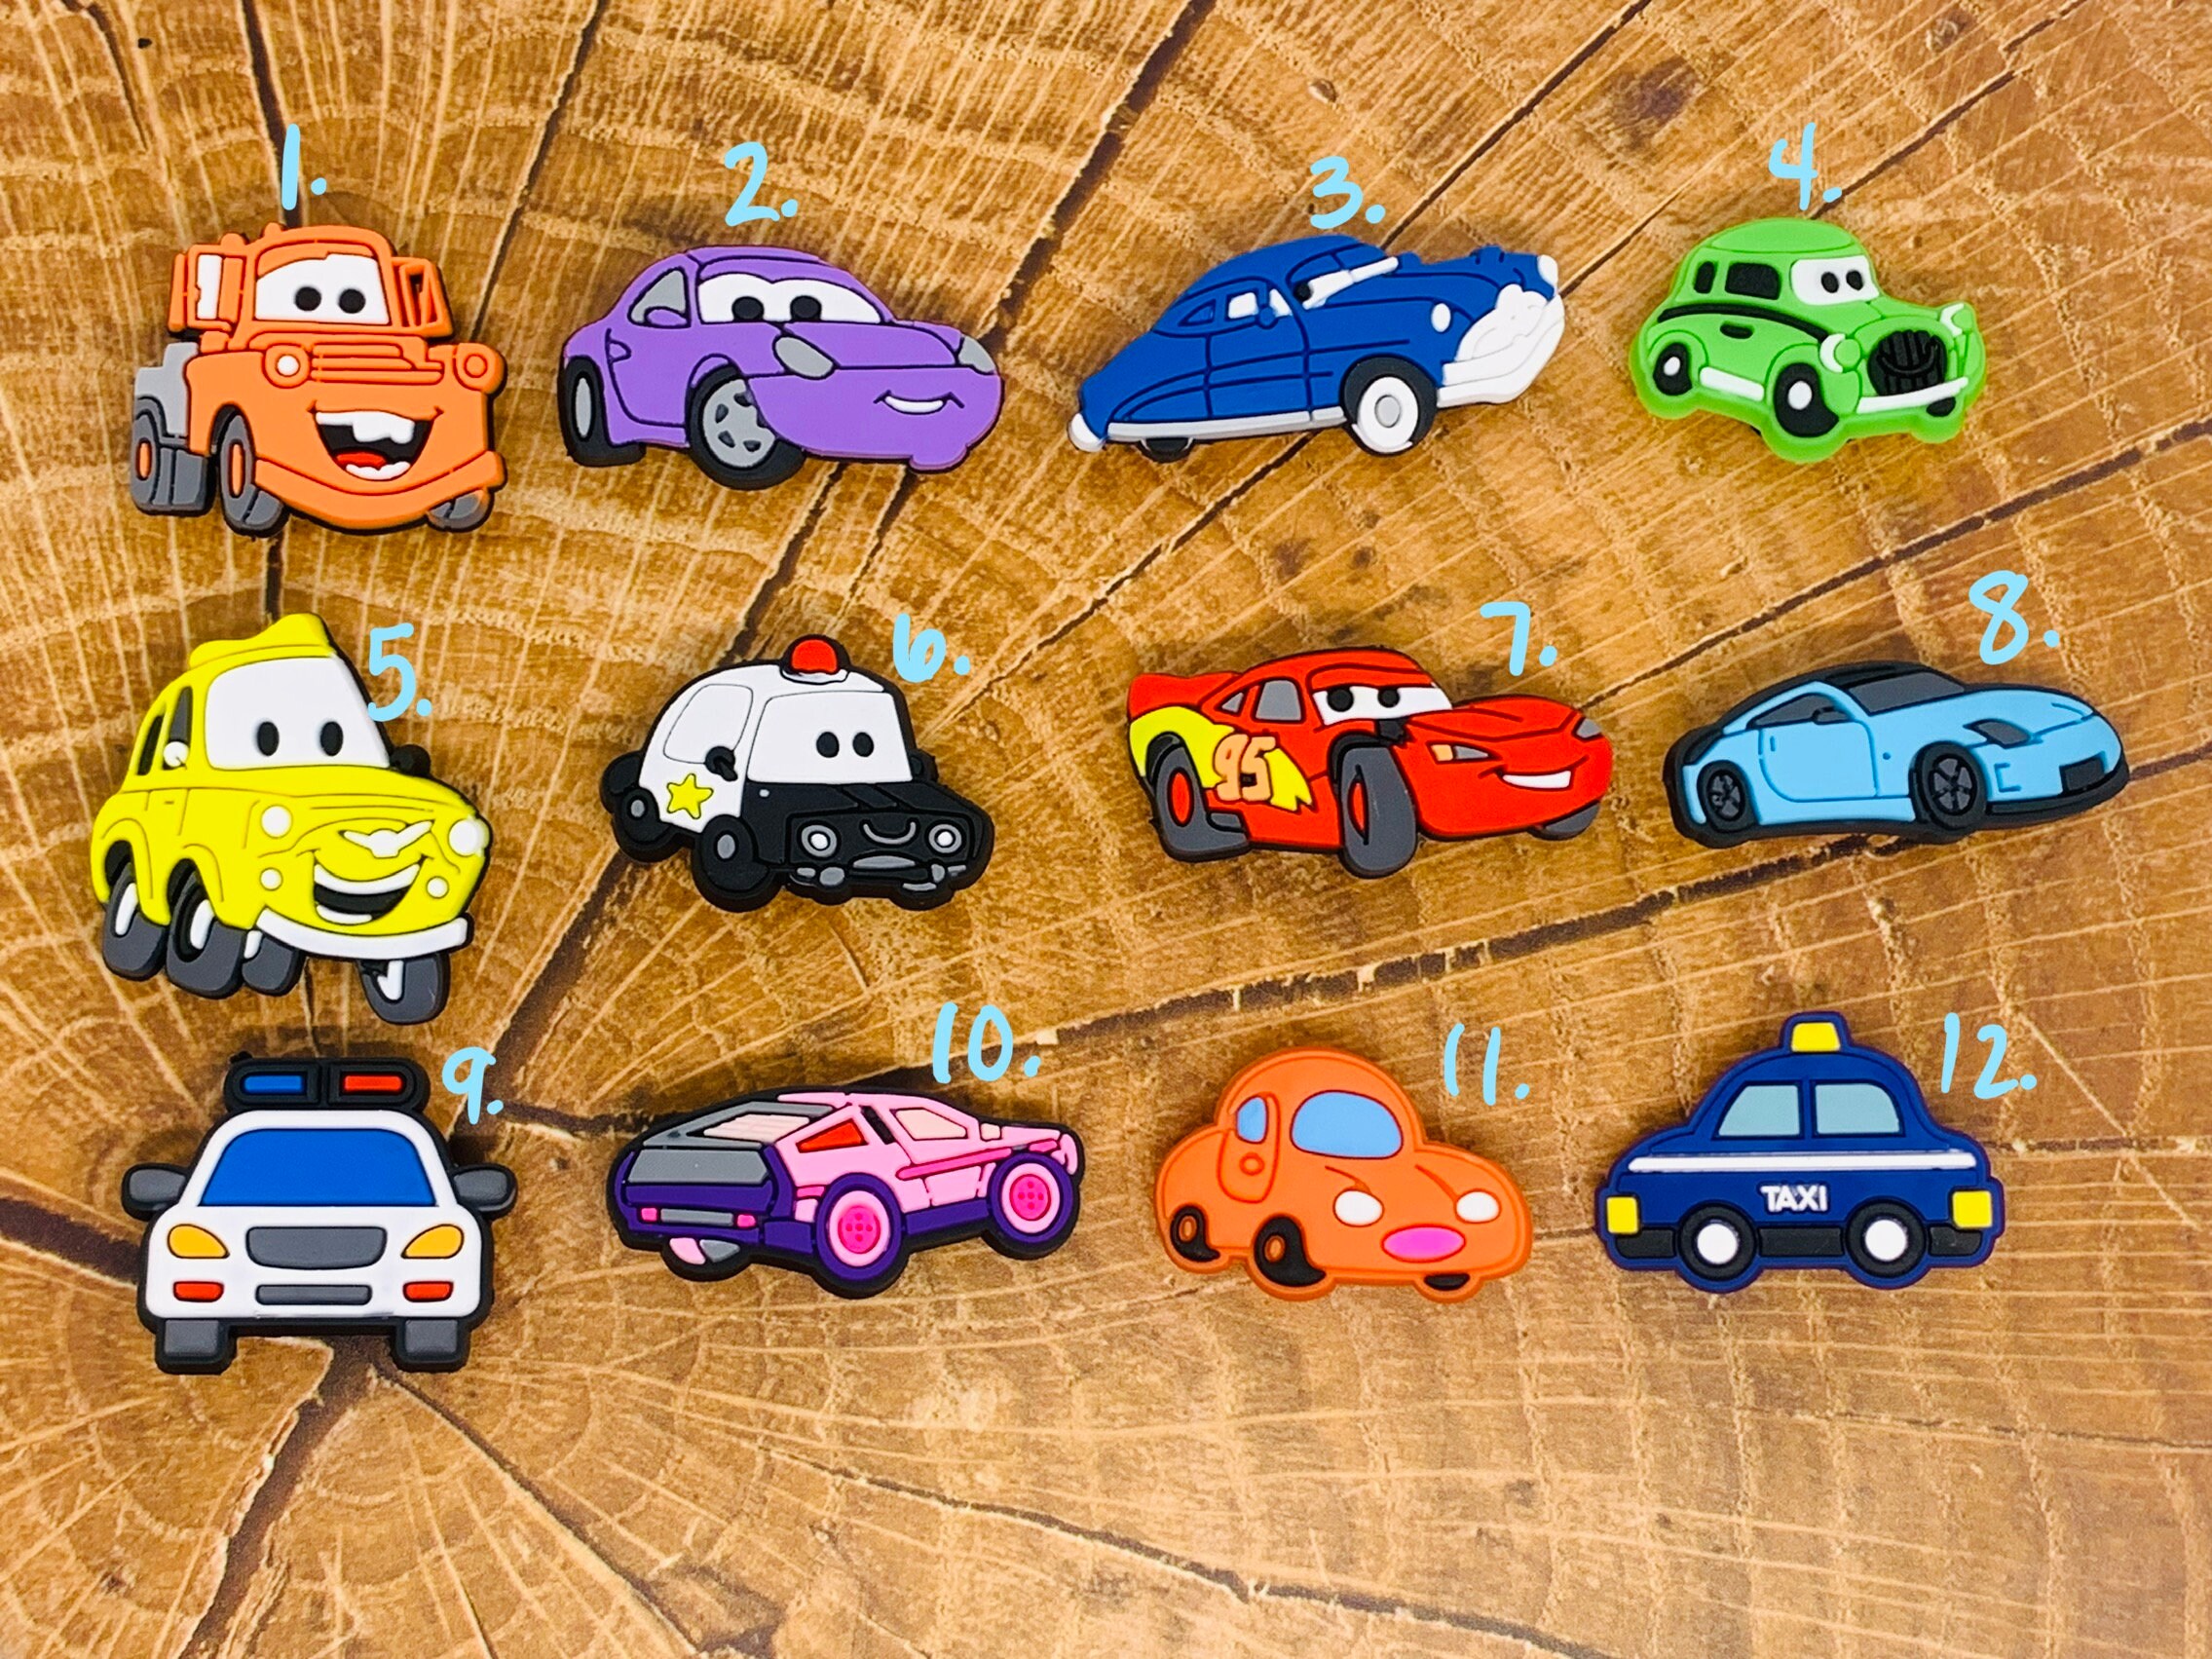  Crocs Unisex-Adult Disney Pixar Cars Lightning McQueen Clog |  Clogs & Mules